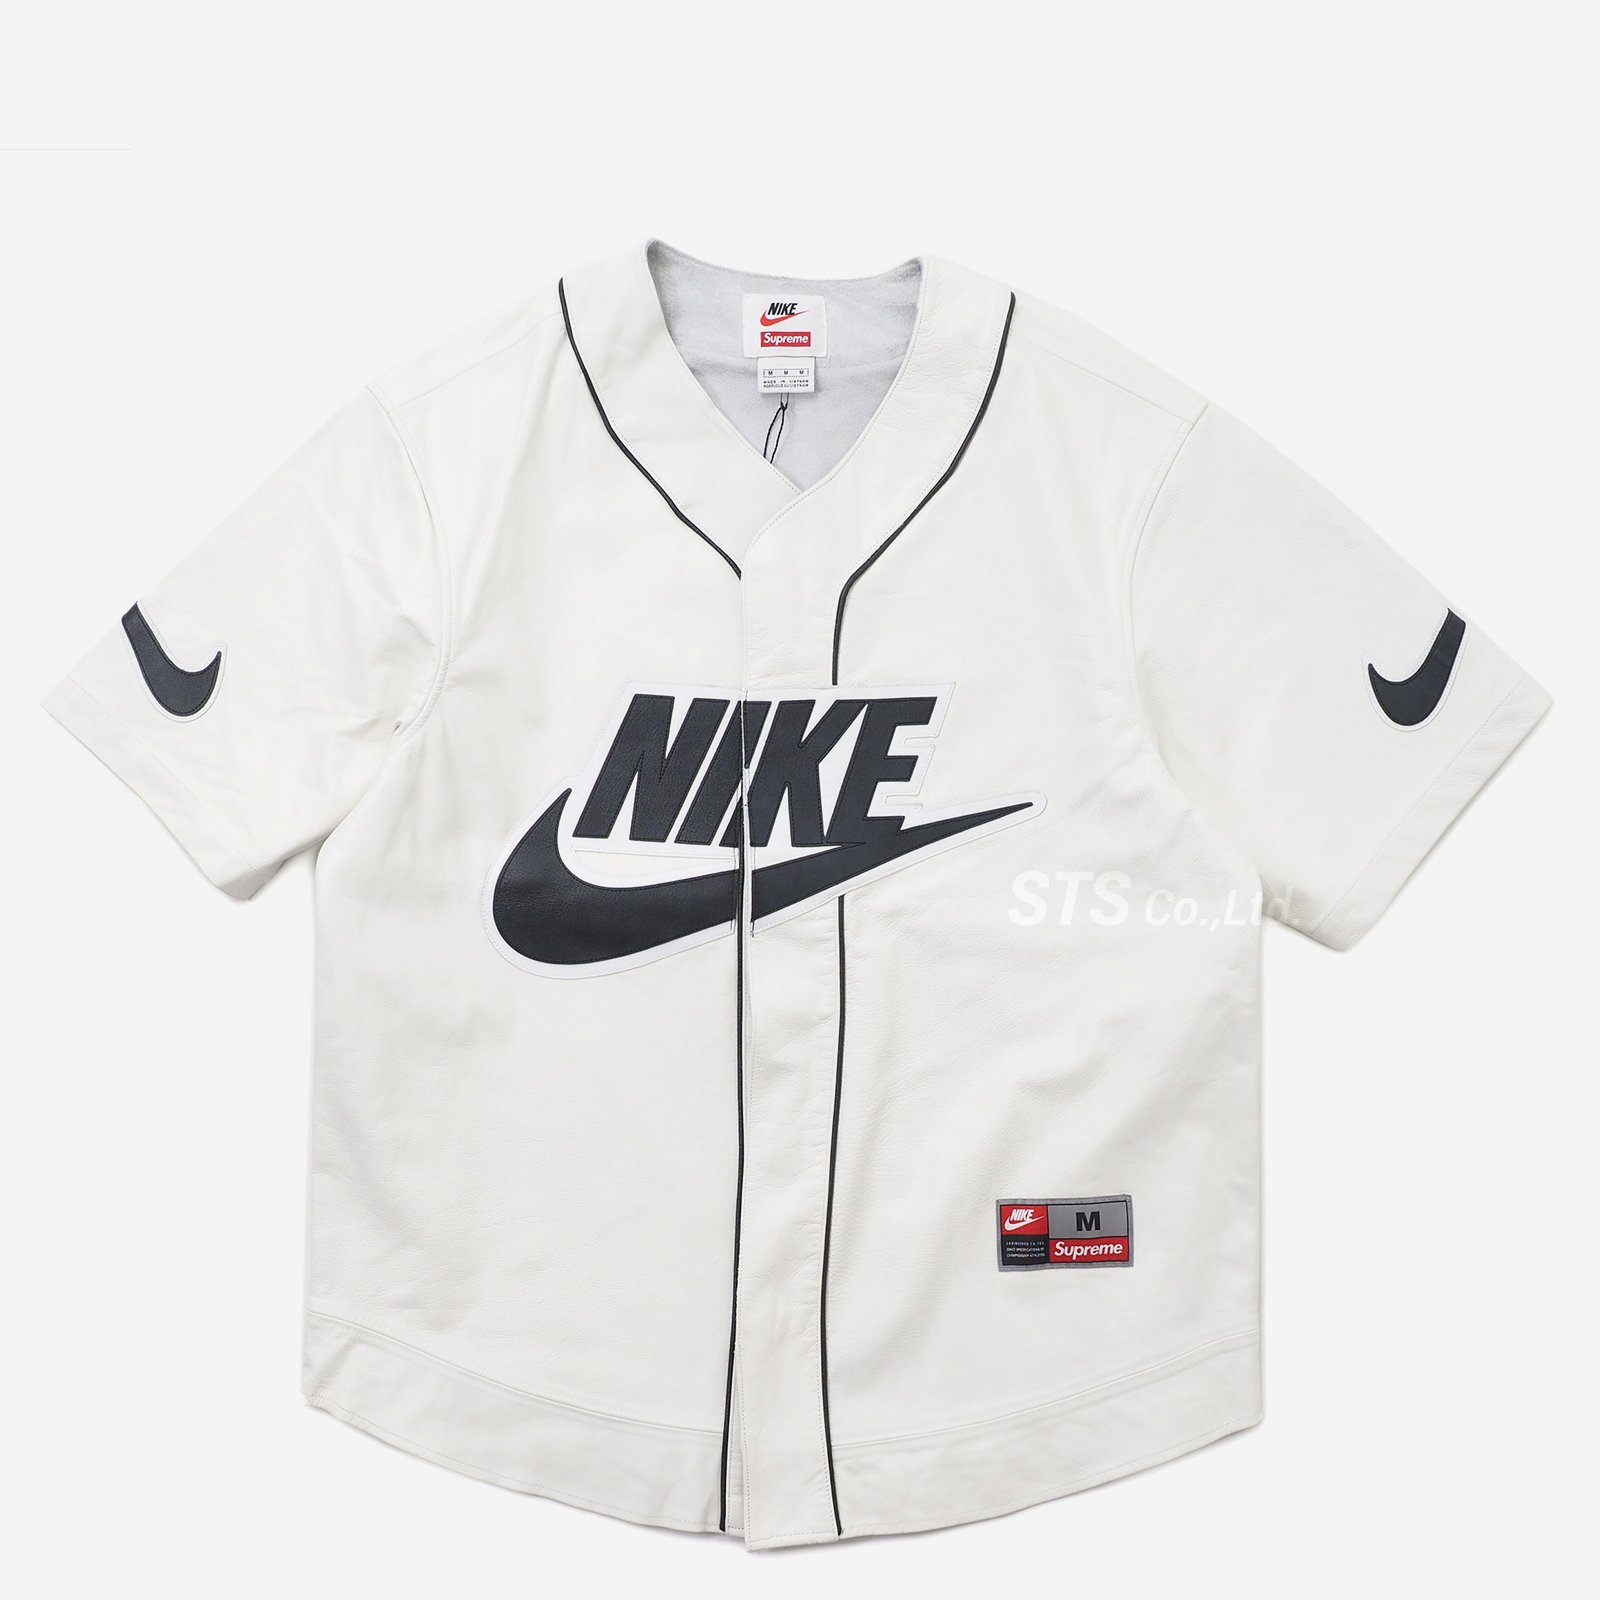 Supreme/Nike Leather Baseball Jersey - ParkSIDER